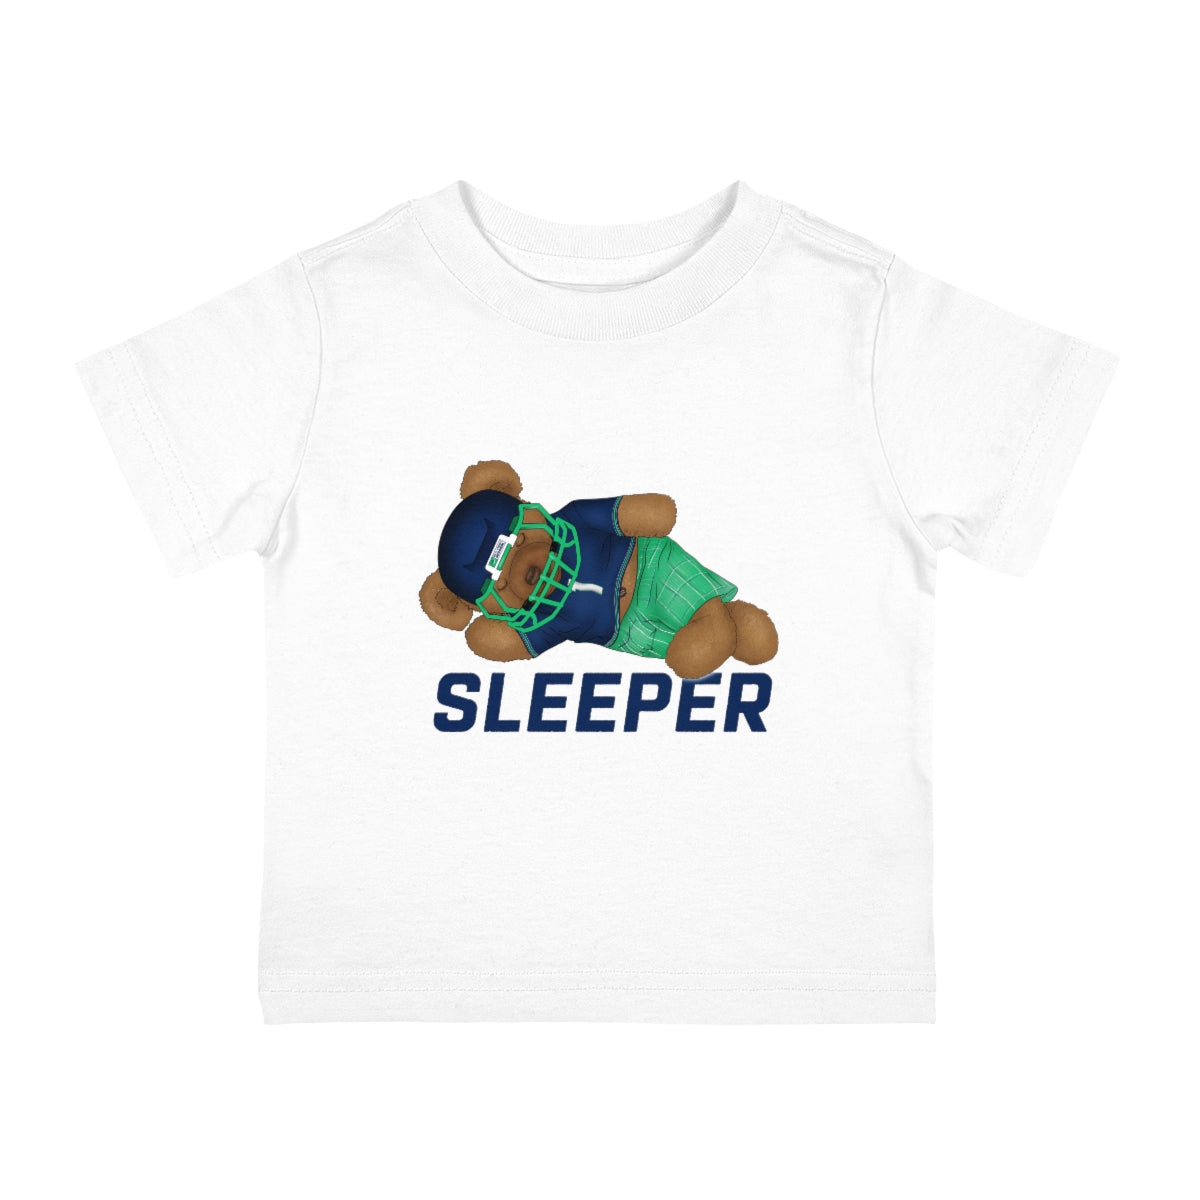 Infant Fantasy Sleeper Bear T-Shirt - Sleeper Collection - Fantasy Football Baby Clothes